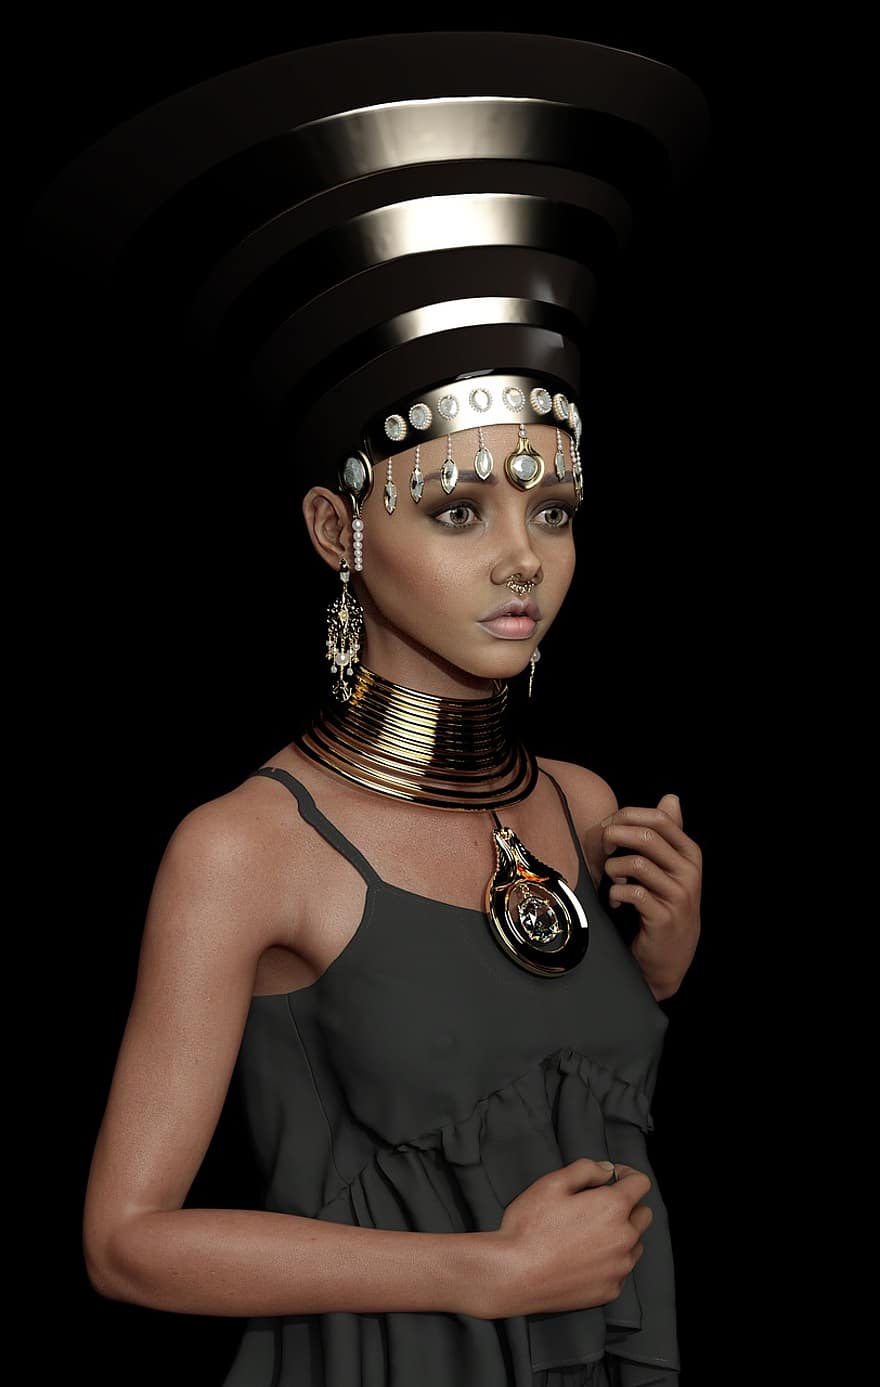 Woman, Egyptian, Headdress, Fantasy, Cosplay, Hat, Clothing, Jewellery, Portrait, Beauty, Pose